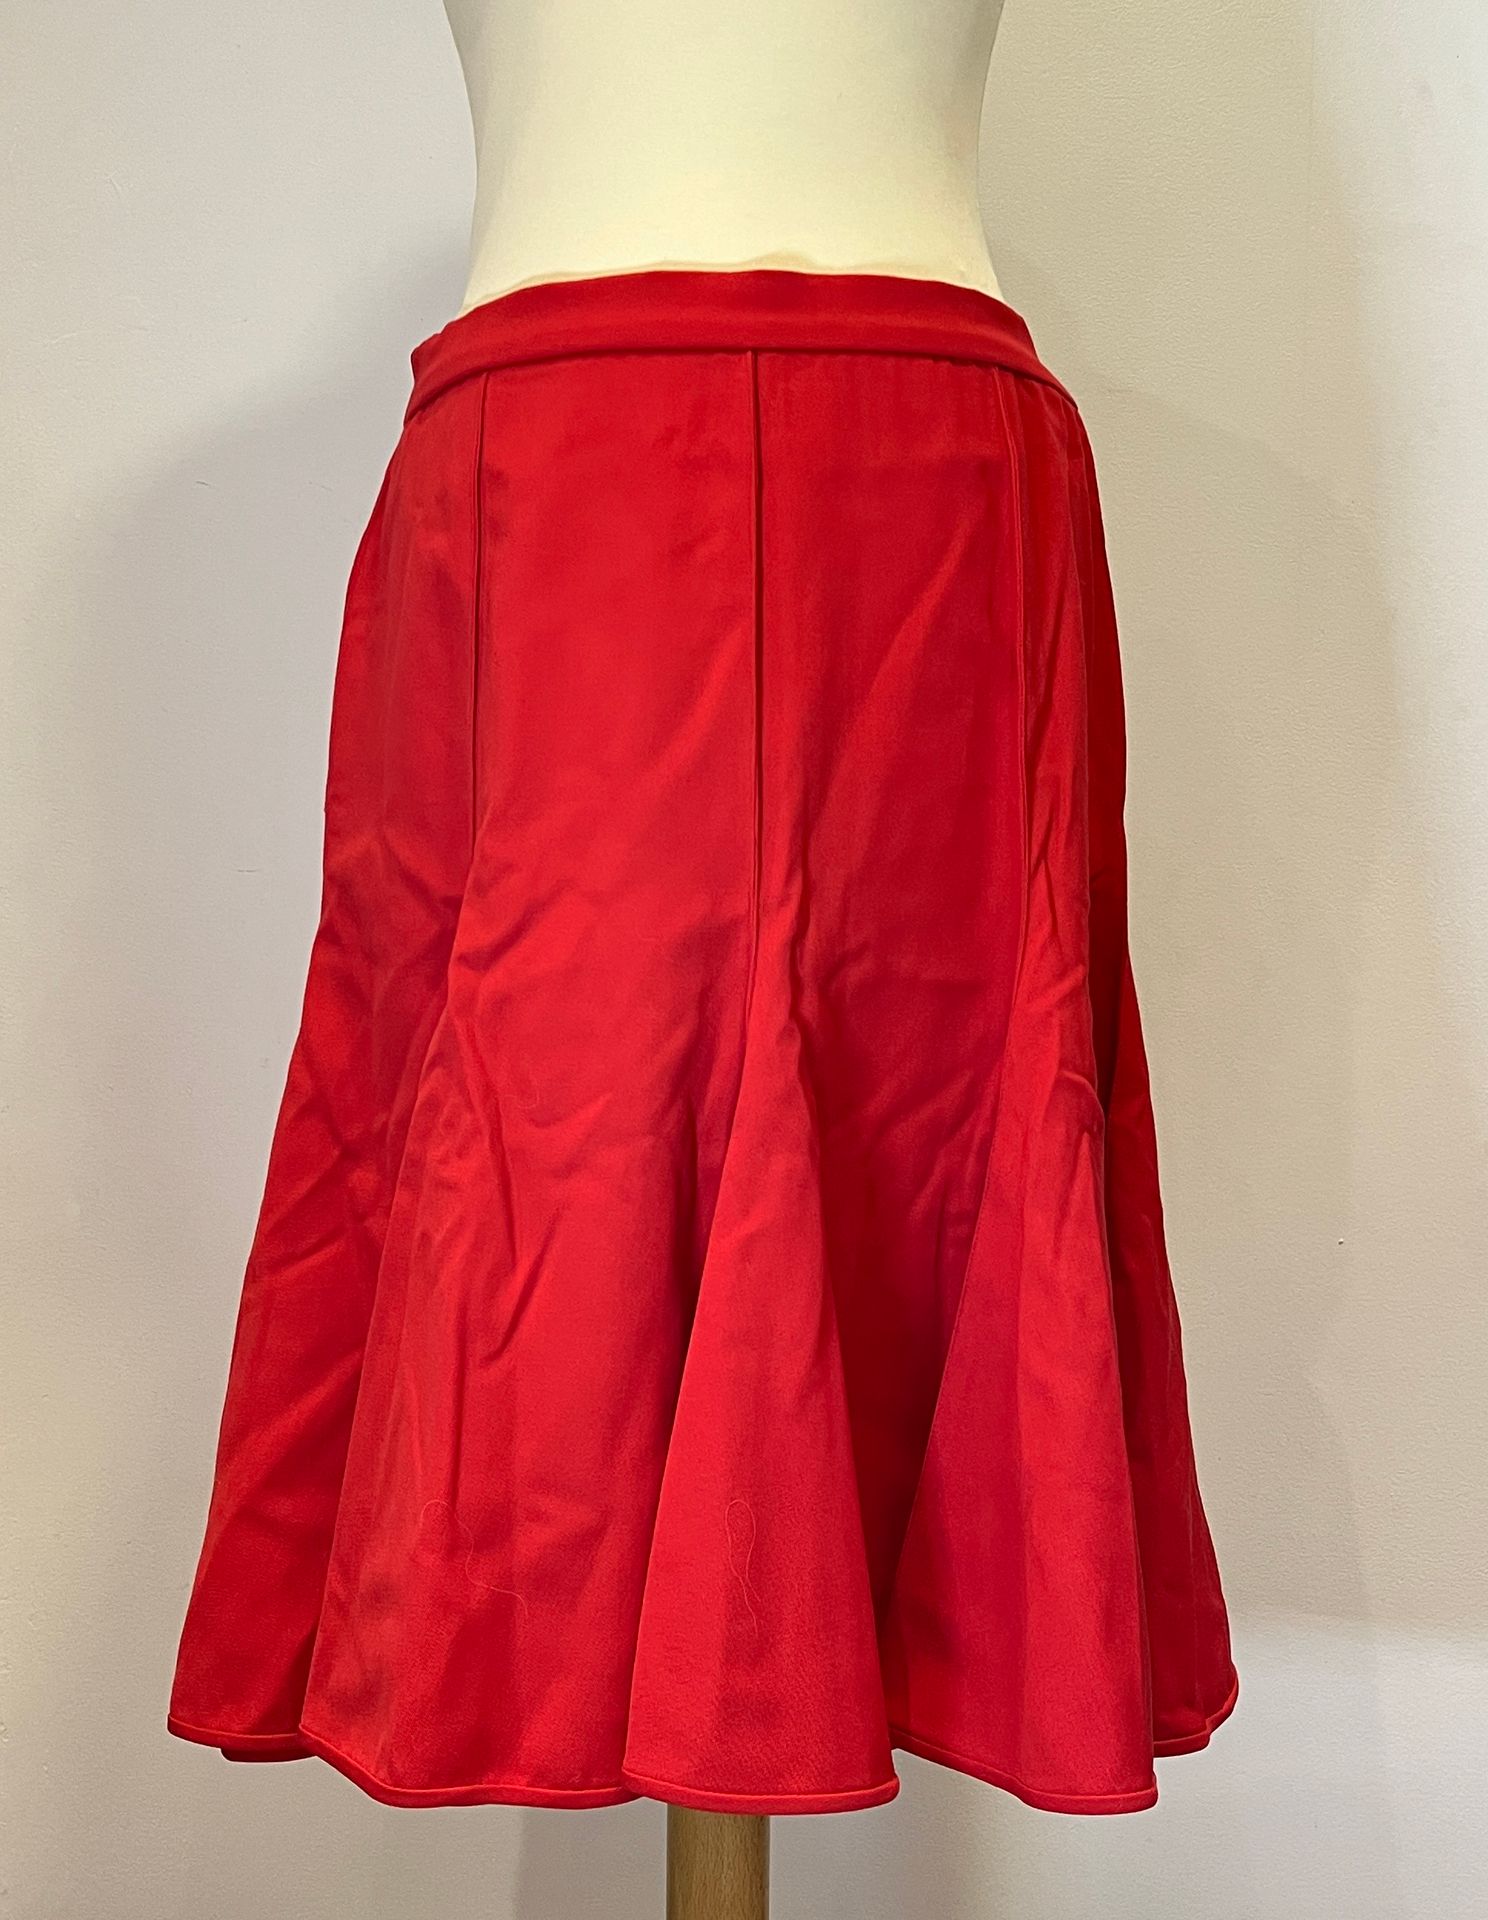 Null VALENTINO BOUTIQUE - 两条水桶裙，一条红色44号，一条白色（米白色42号）。